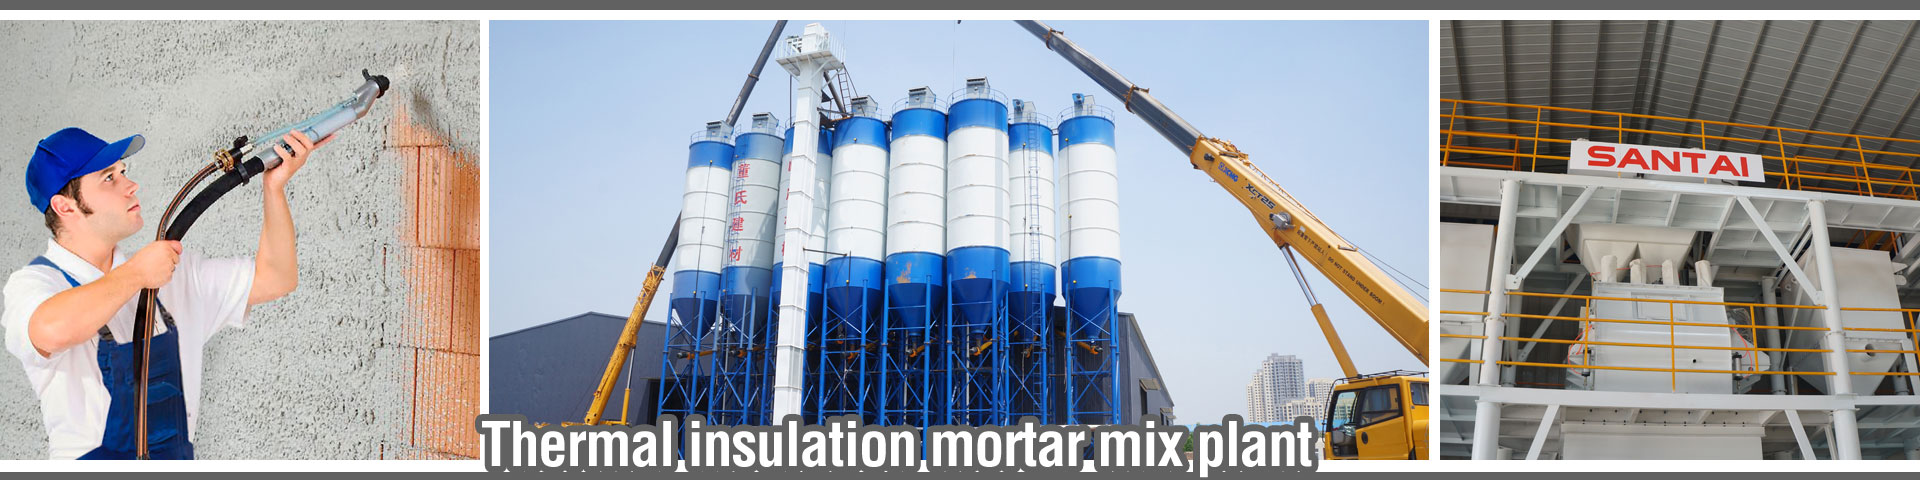 thermal insulation mortar plant manufacturer supplier